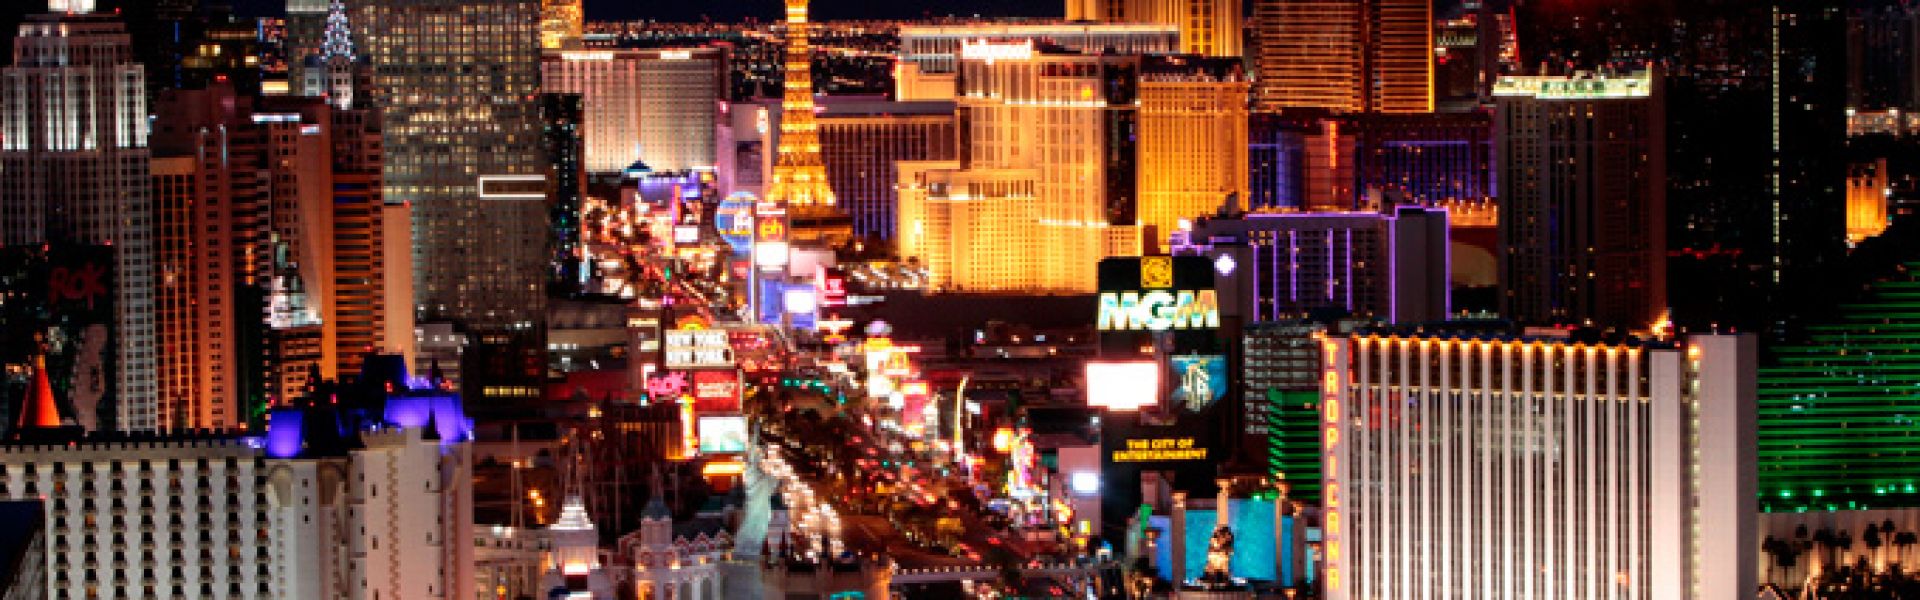 Las Vegas City Of Lights